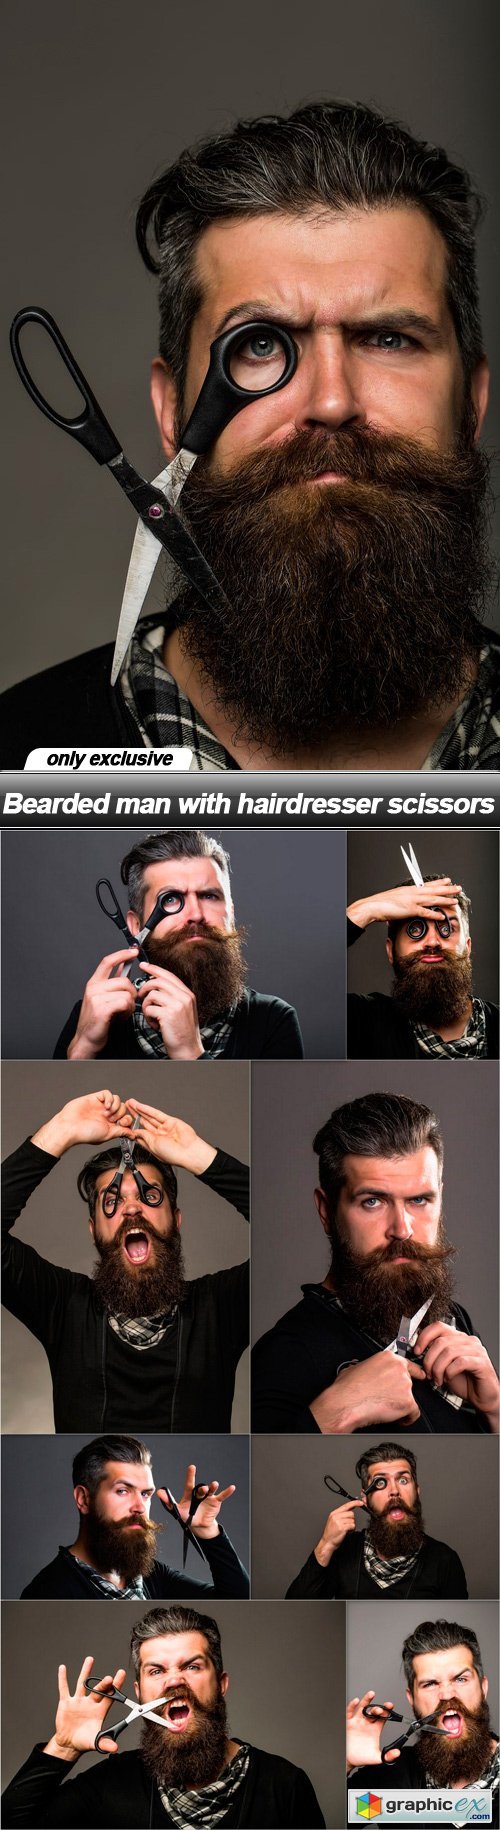 Bearded man with hairdresser scissors - 9 UHQ JPEG